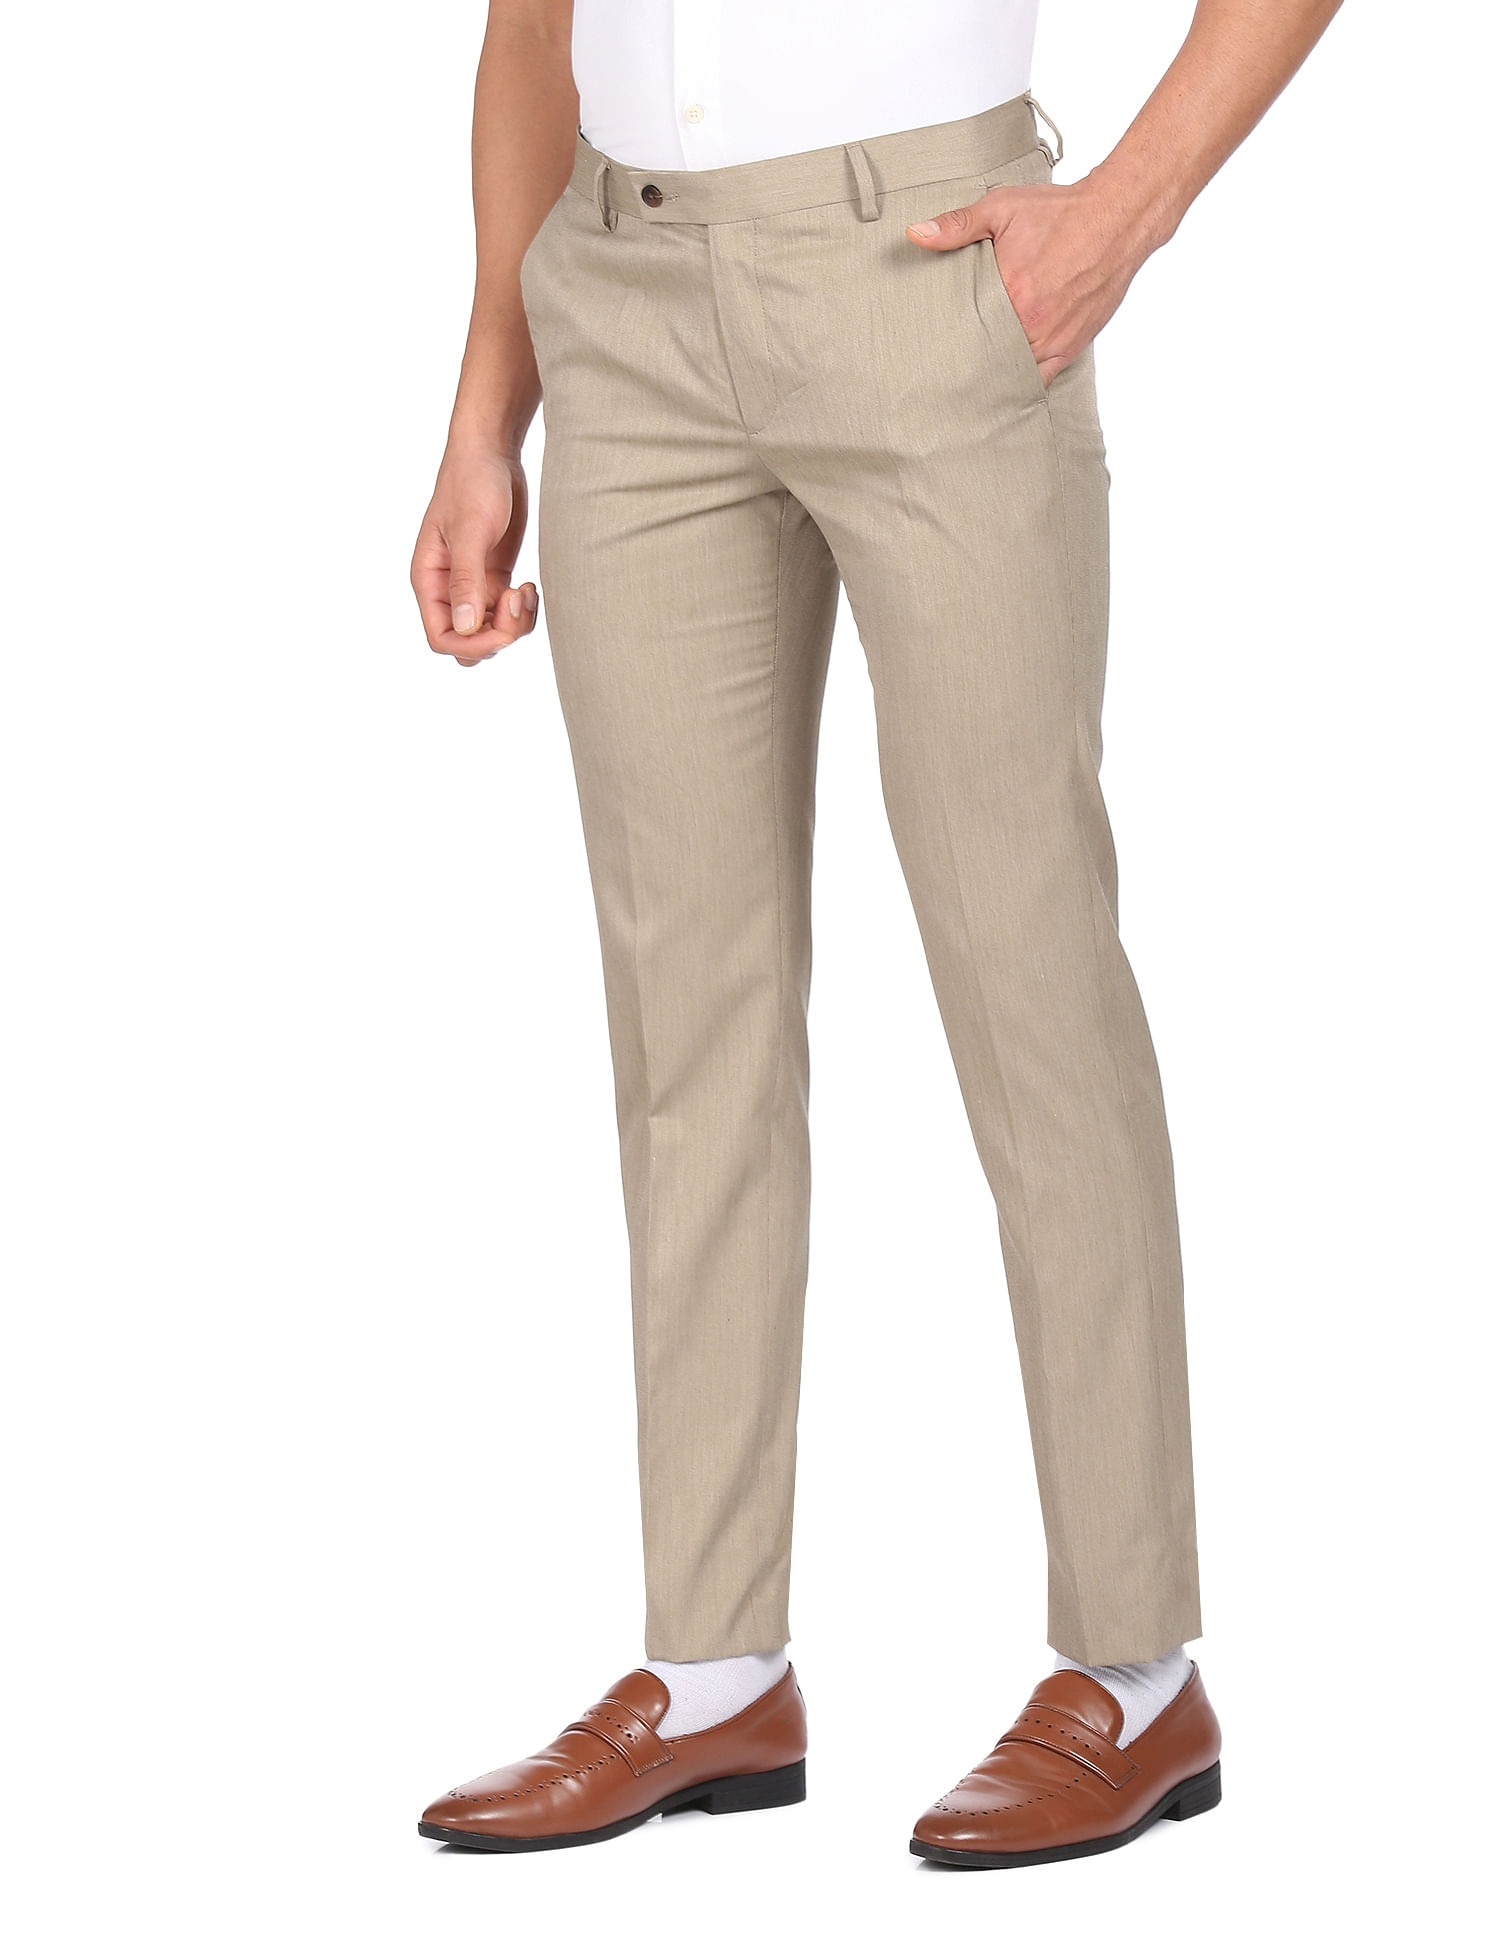 Buy Men Brown Slim Fit Solid Casual Trousers Online  733758  Allen Solly